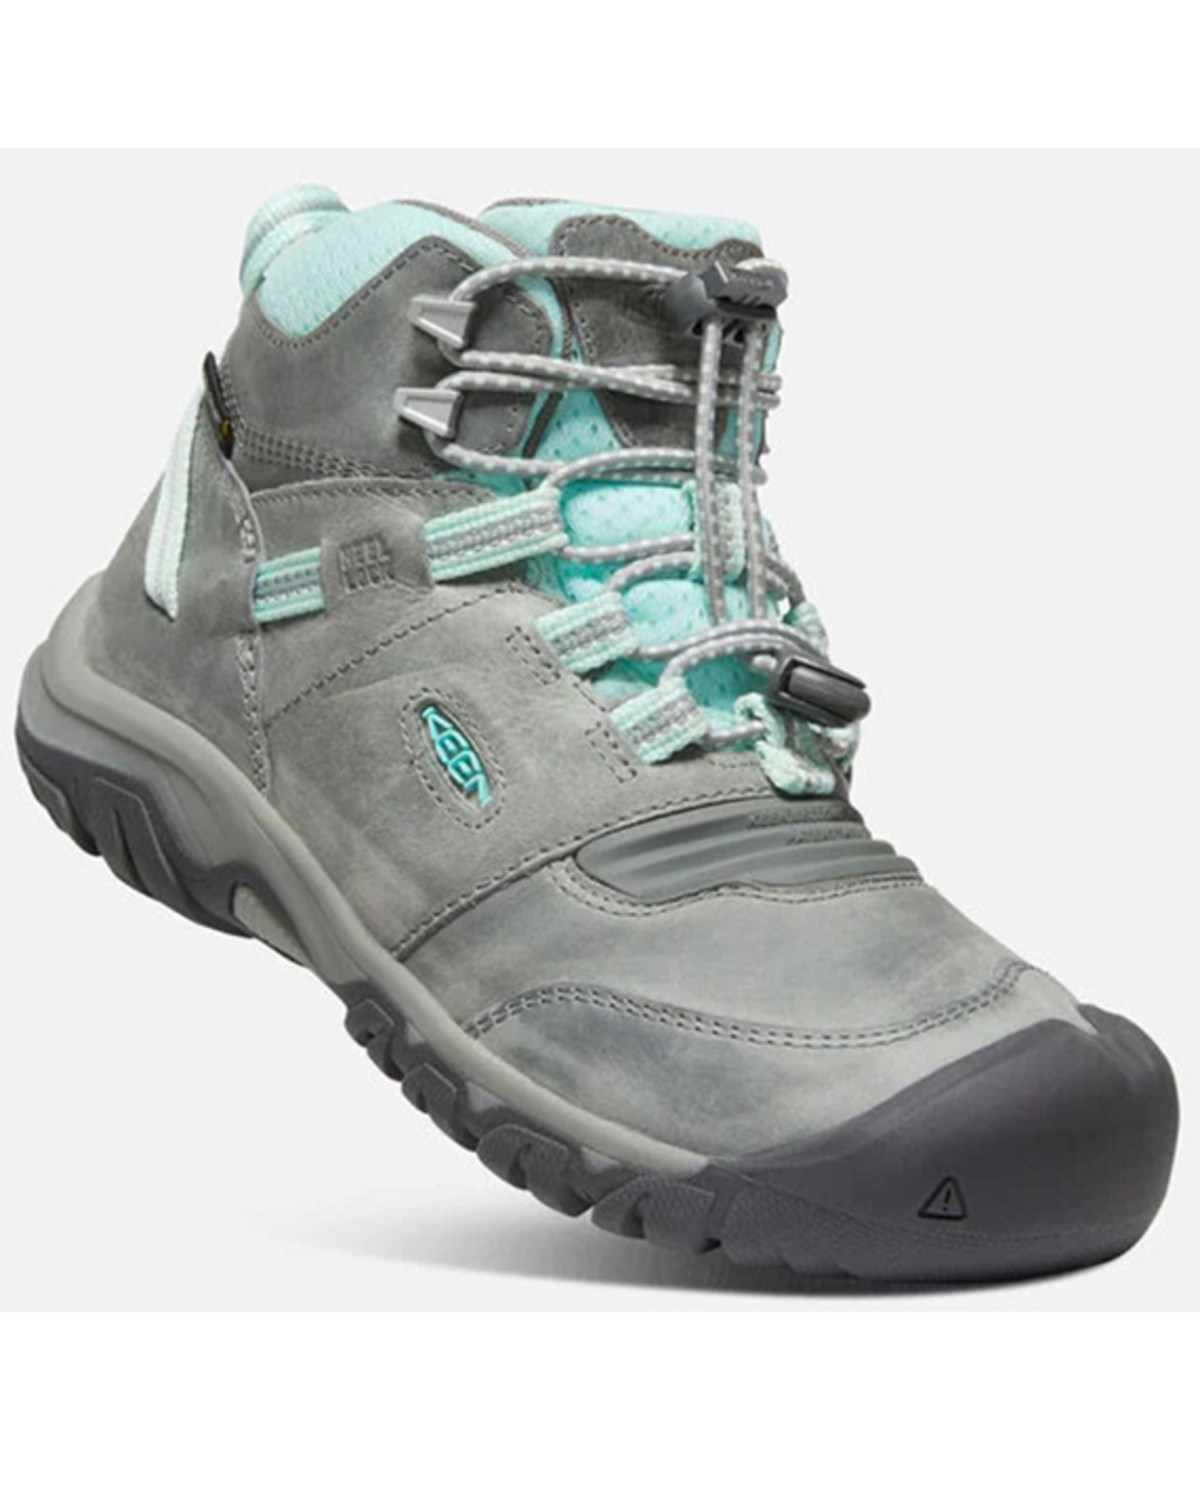 Keen Girls' Ridge Flex Waterproof Hiking Boots